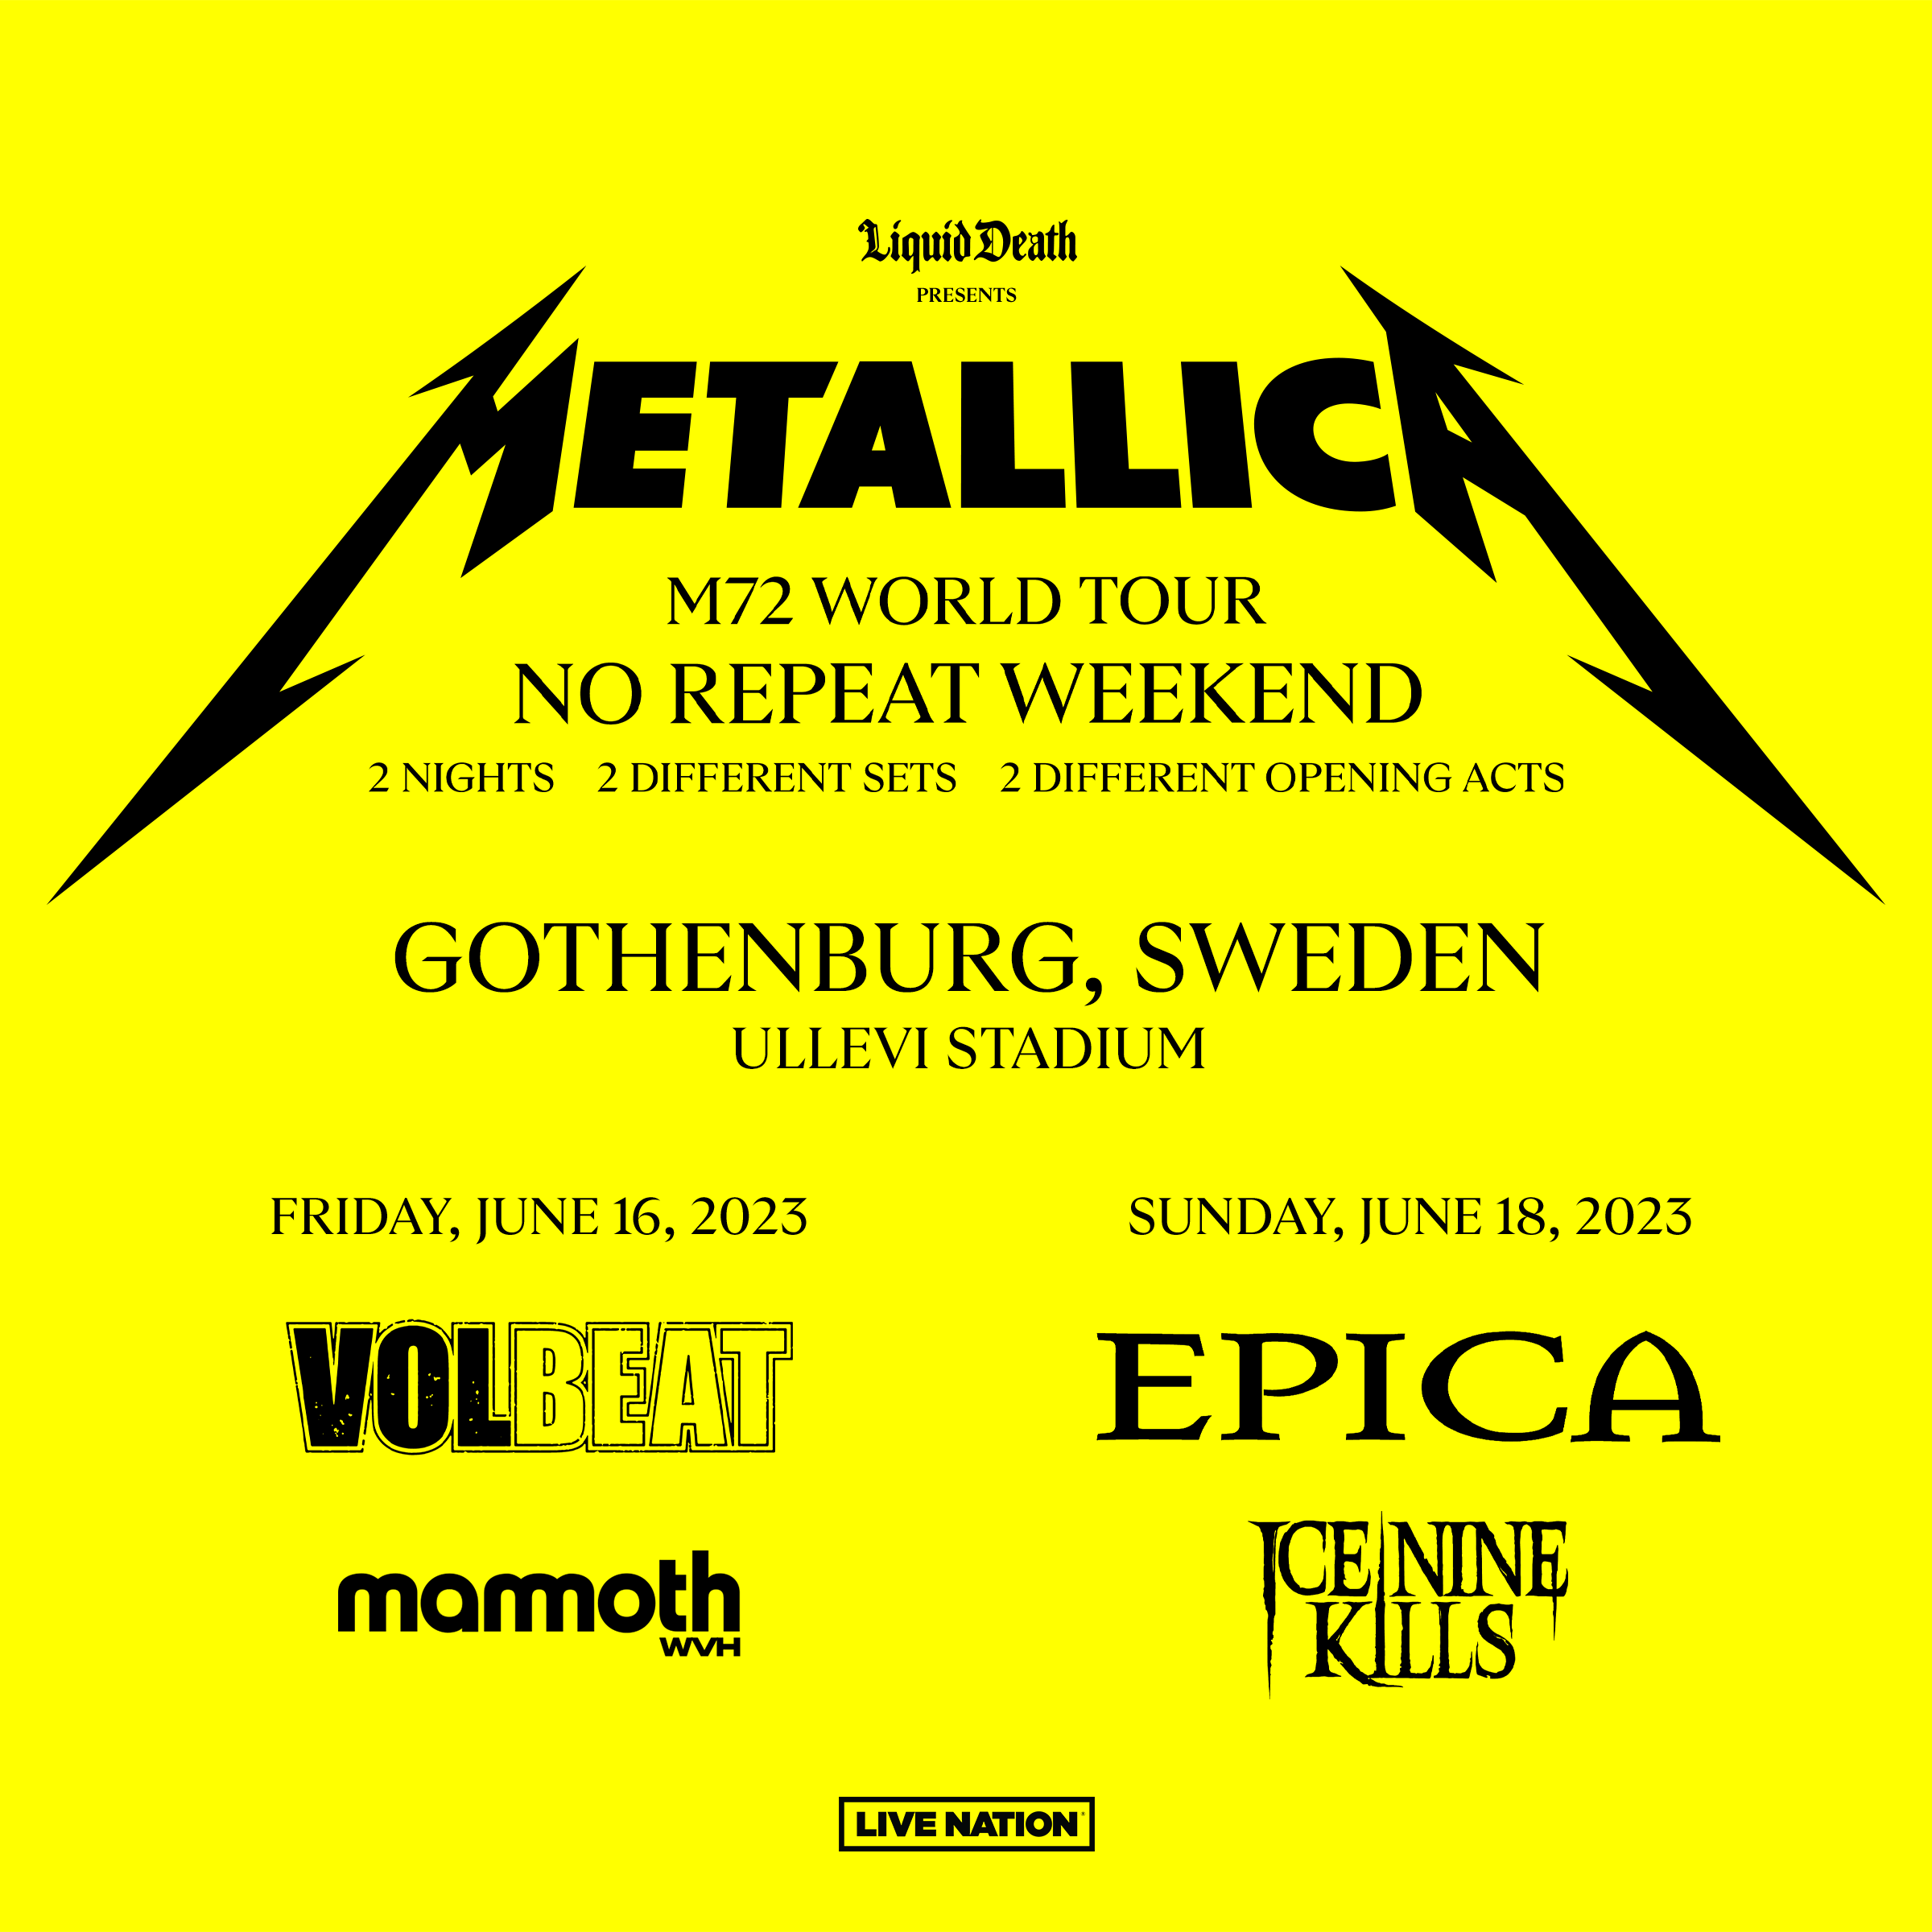 Jolly Amerika elektrode Epica to Replace Five Finger Death Punch in Gothenburg | Metallica.com